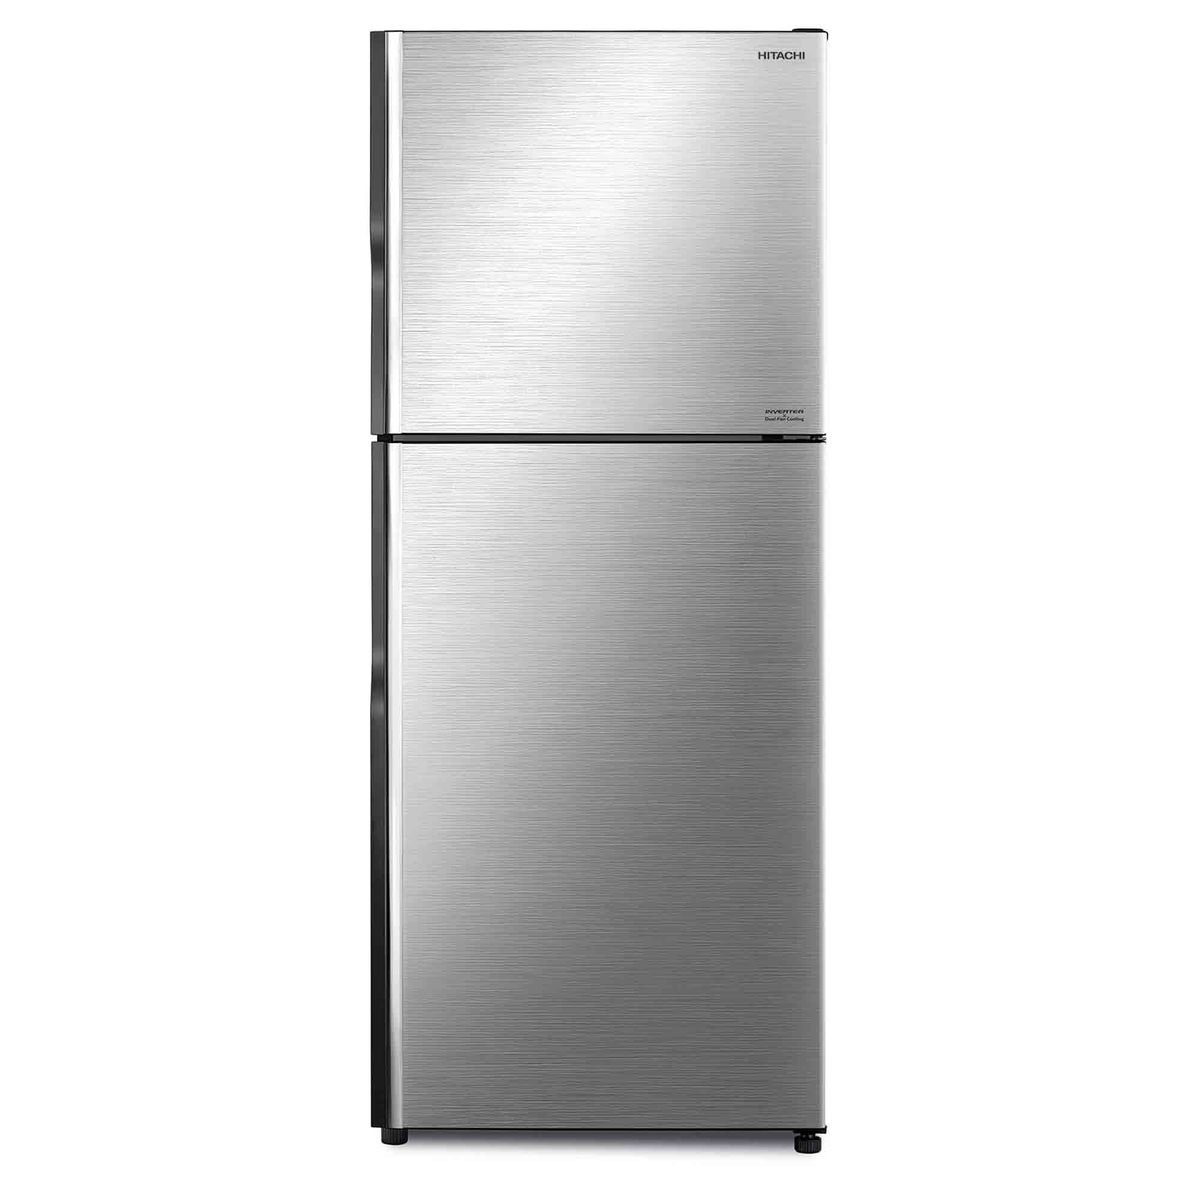 Hitachi Double Door Refrigerator RV450PUK8KBSL 450Ltr